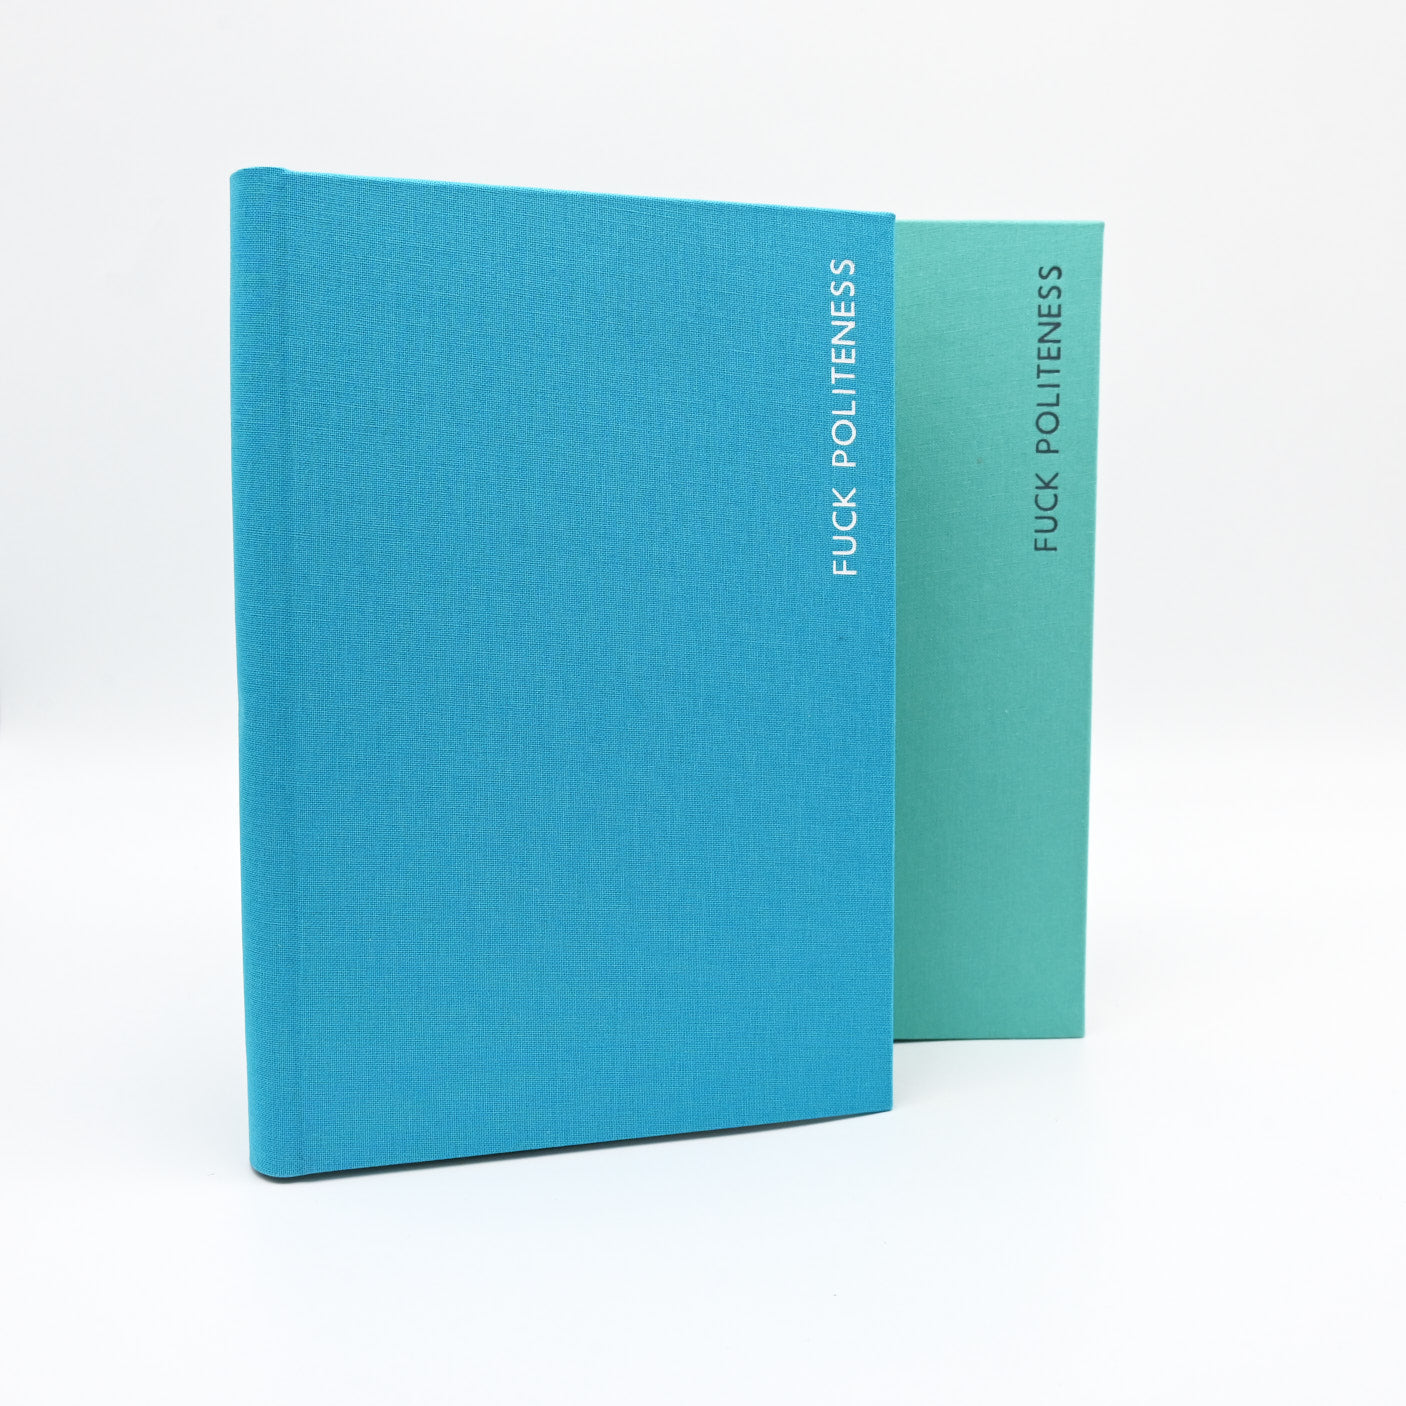 F*ck politeness – Notizbuch A5 - bright blue